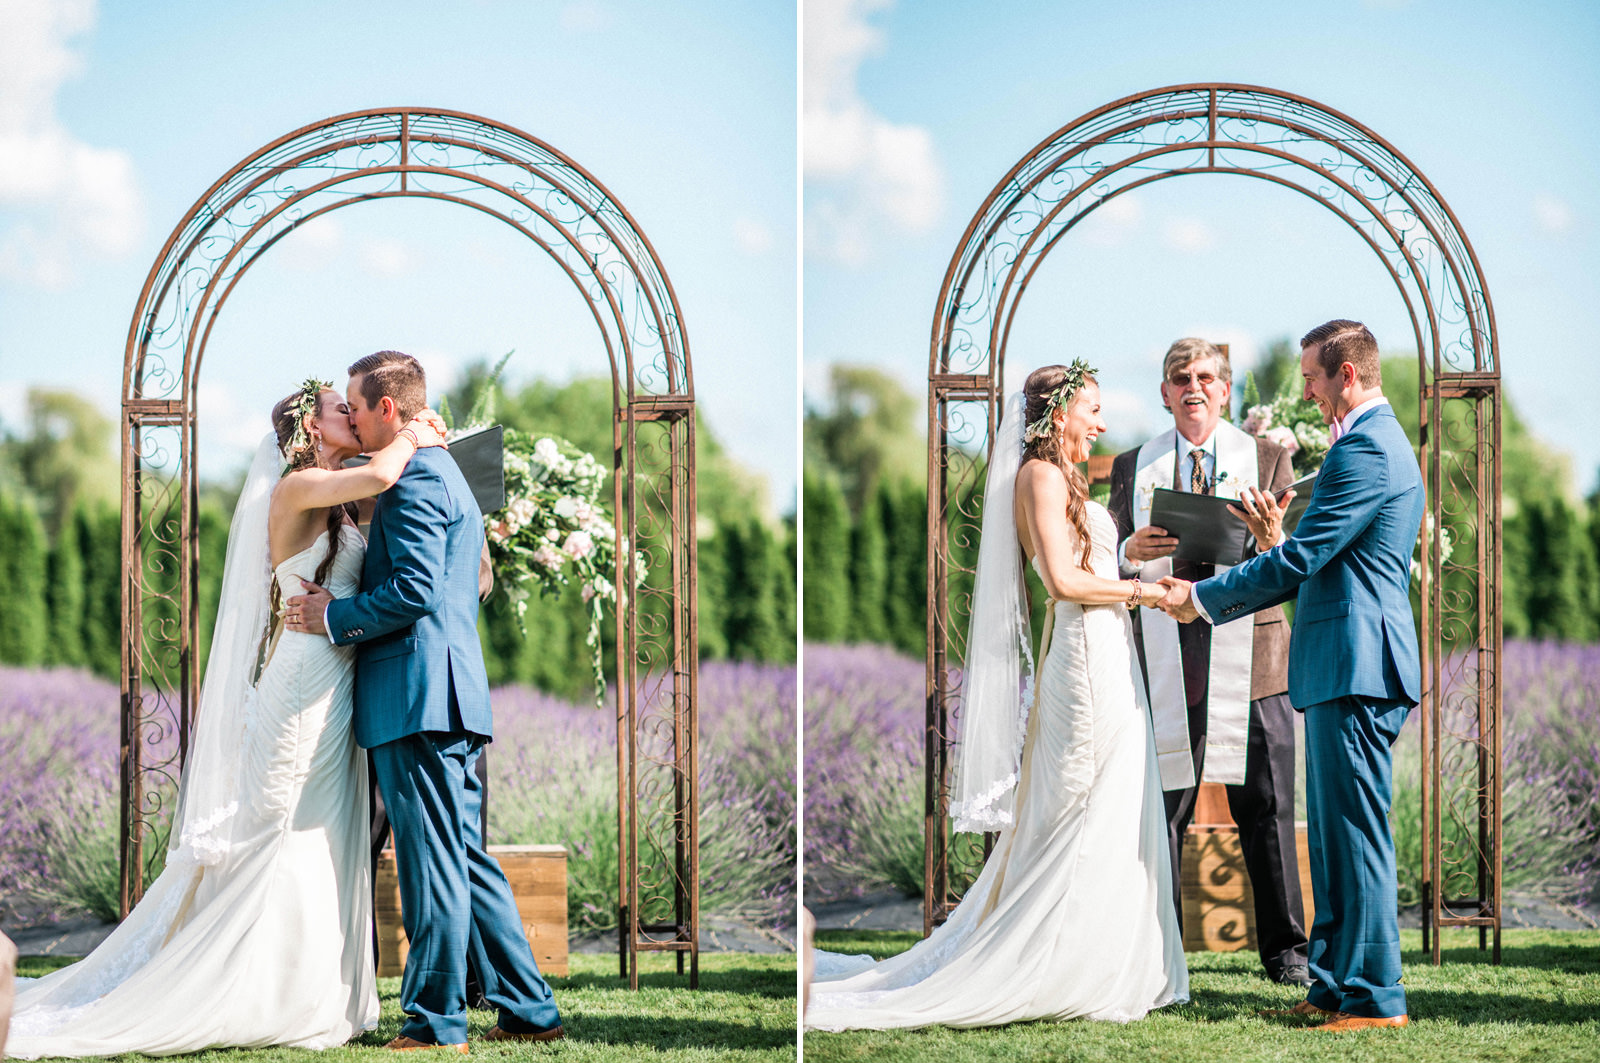 046-woodinville-lavendar-farm-wedding-with-golden-glowy-photos.jpg